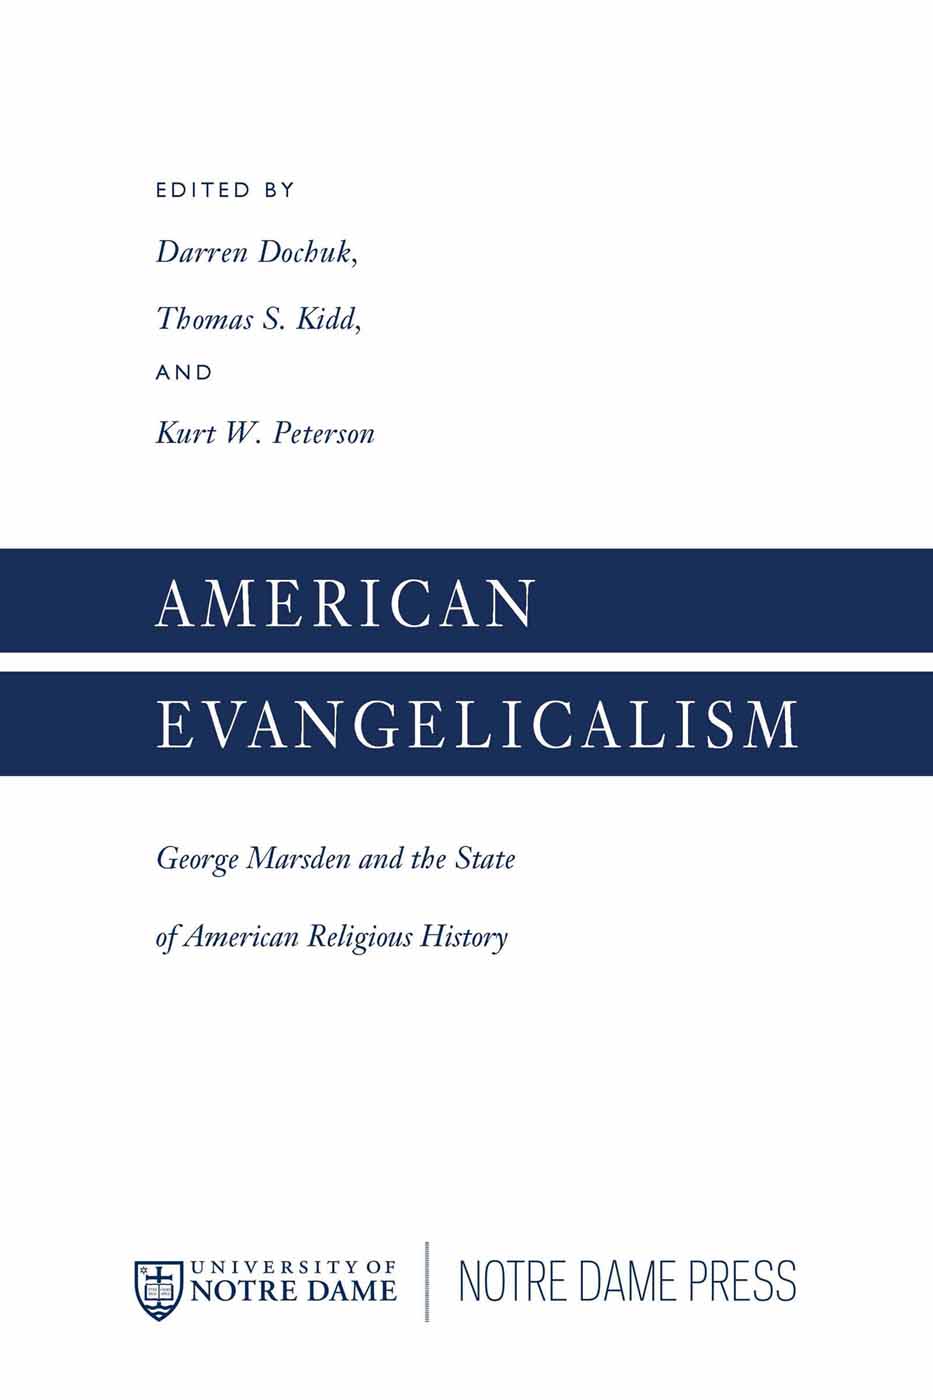 AMERICAN EVANGELICALISM George M Marsden Photo by Lisa Svelmoe EDITED BY - photo 1